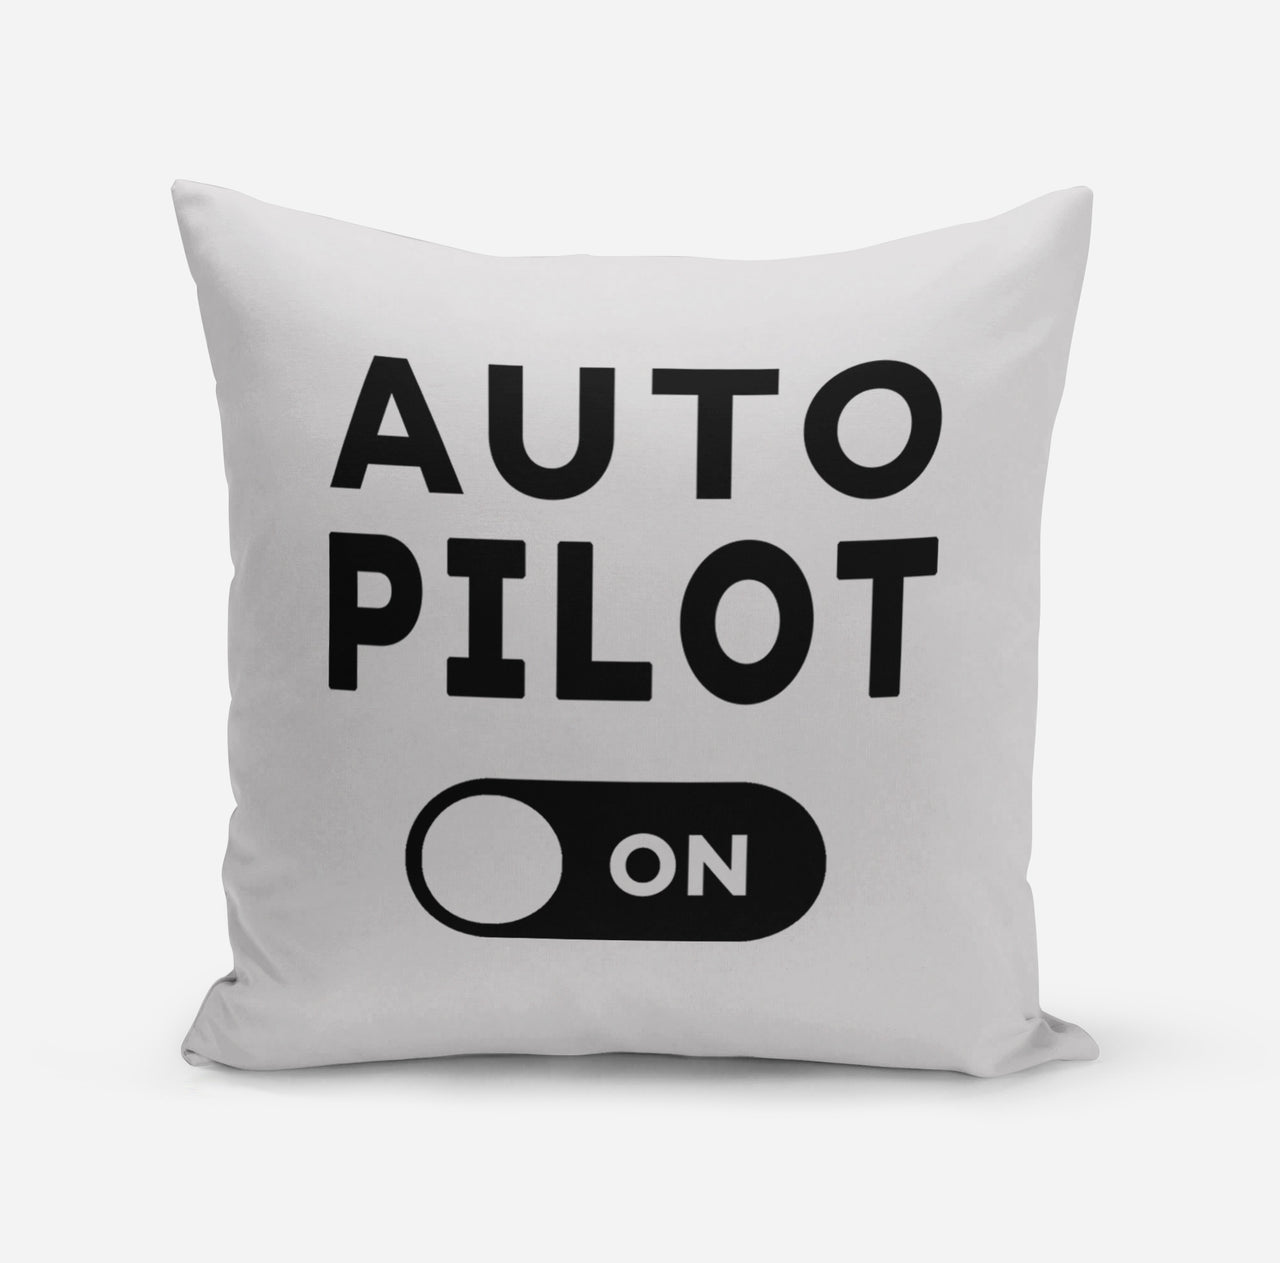 Auto Pilot ON Designed Pillows